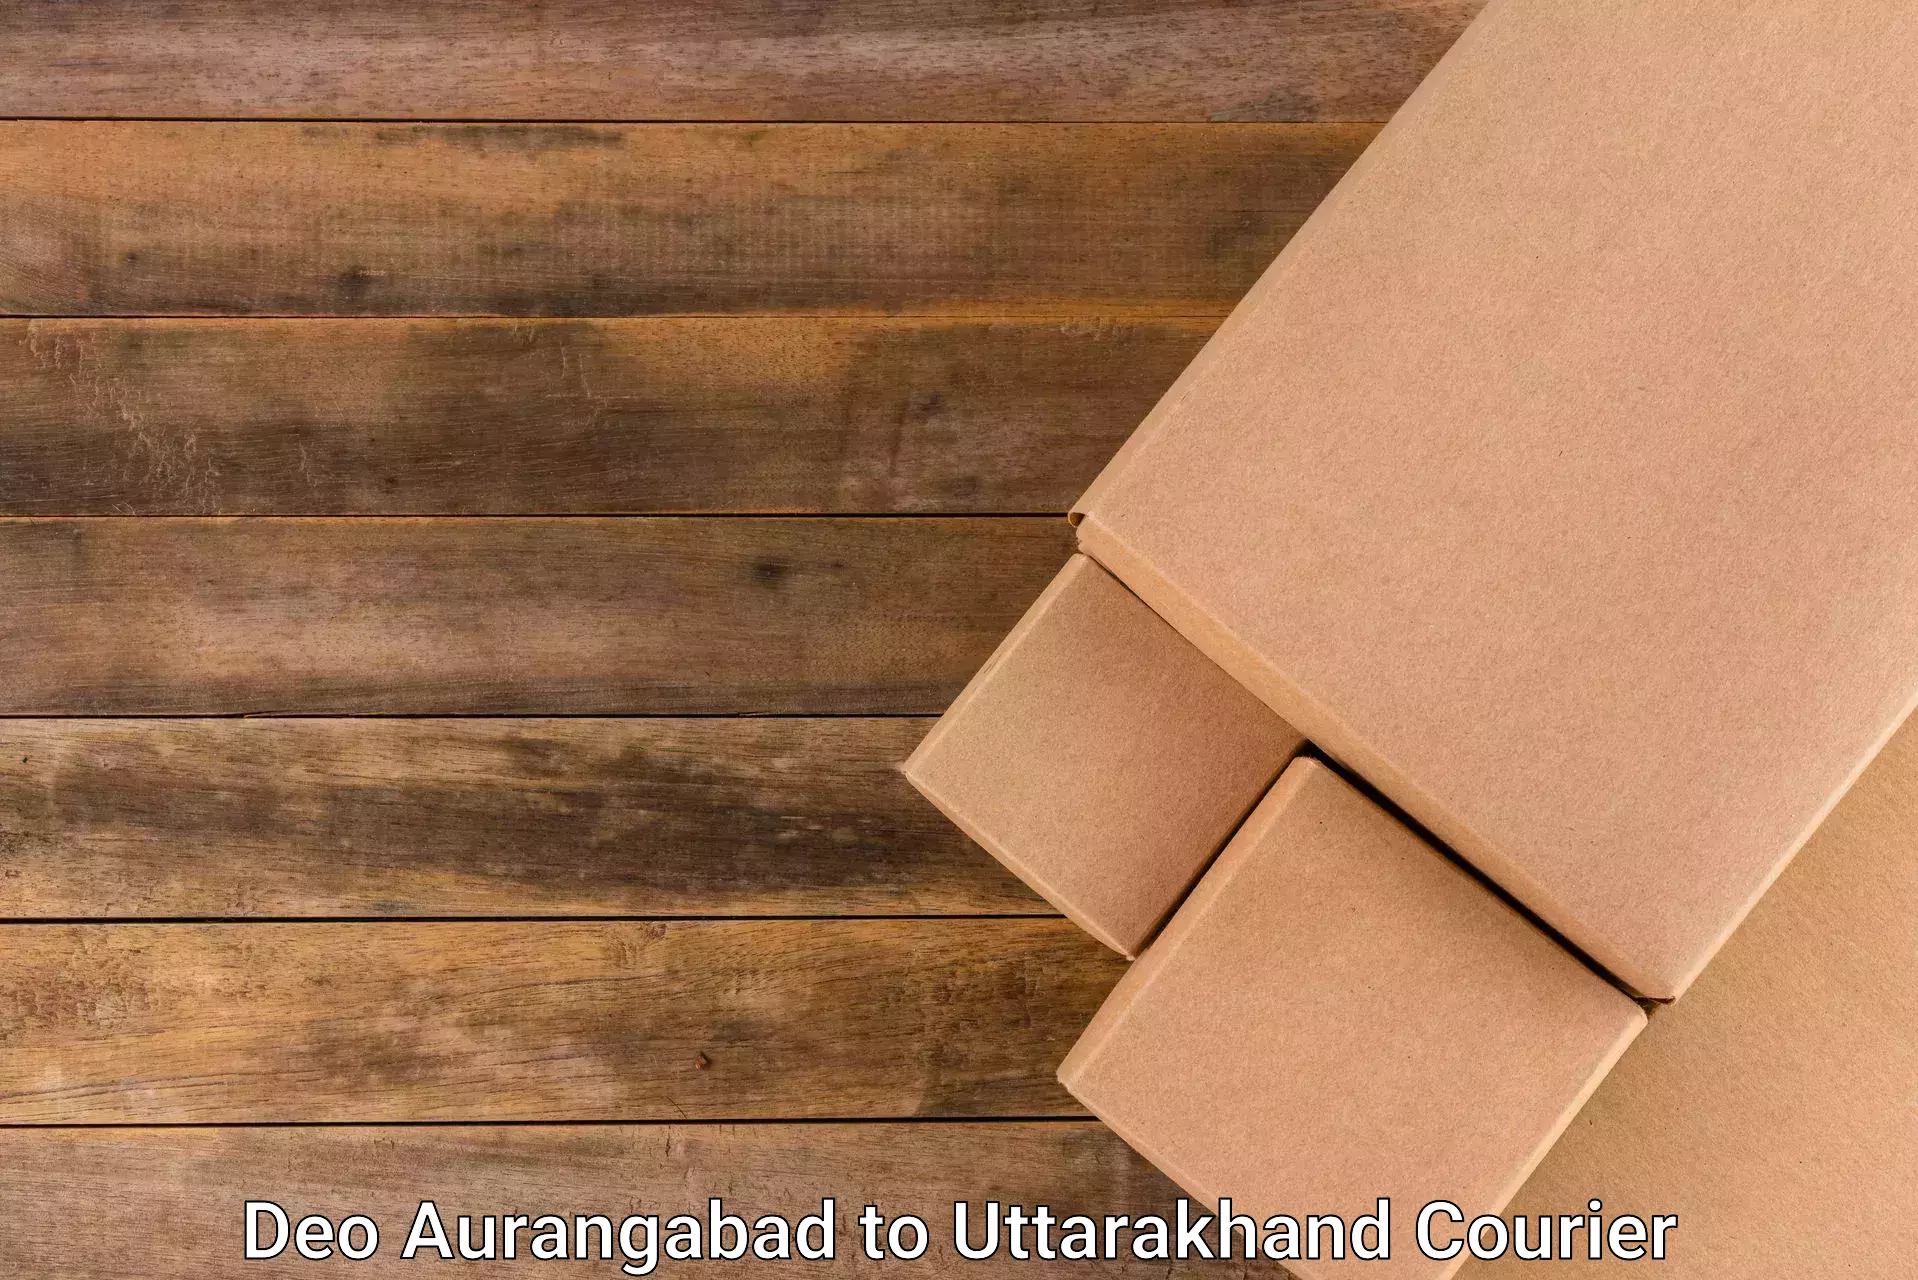 User-friendly courier app Deo Aurangabad to Pithoragarh